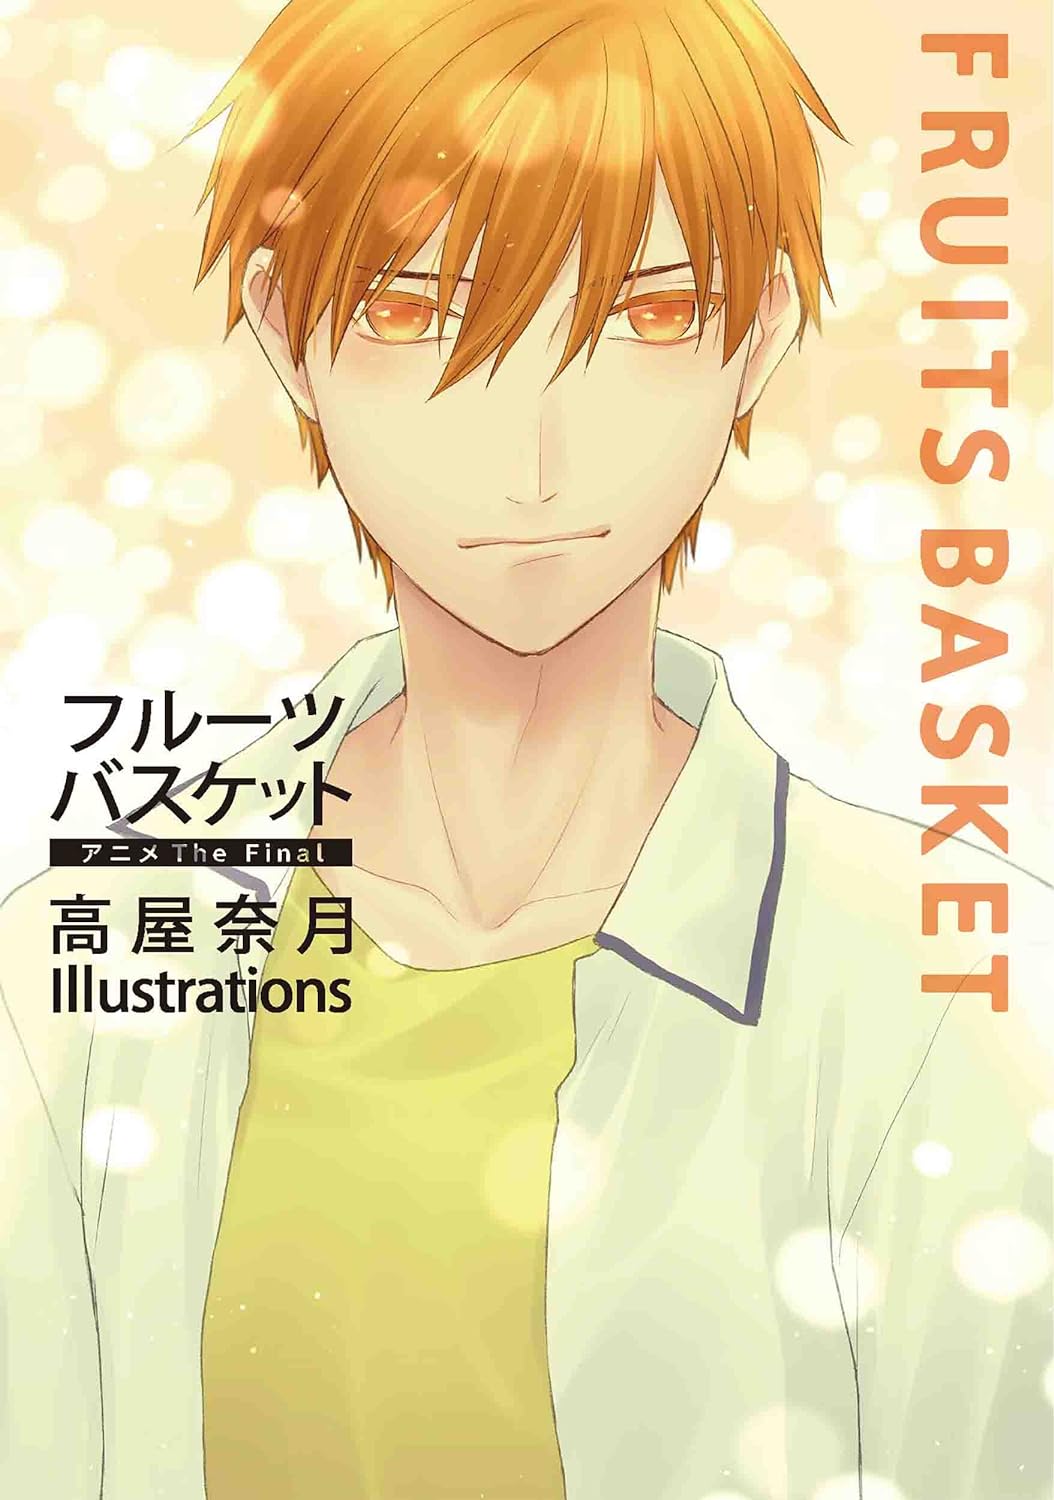 Artbook Fruits Basket Anime Final Season Illustrations